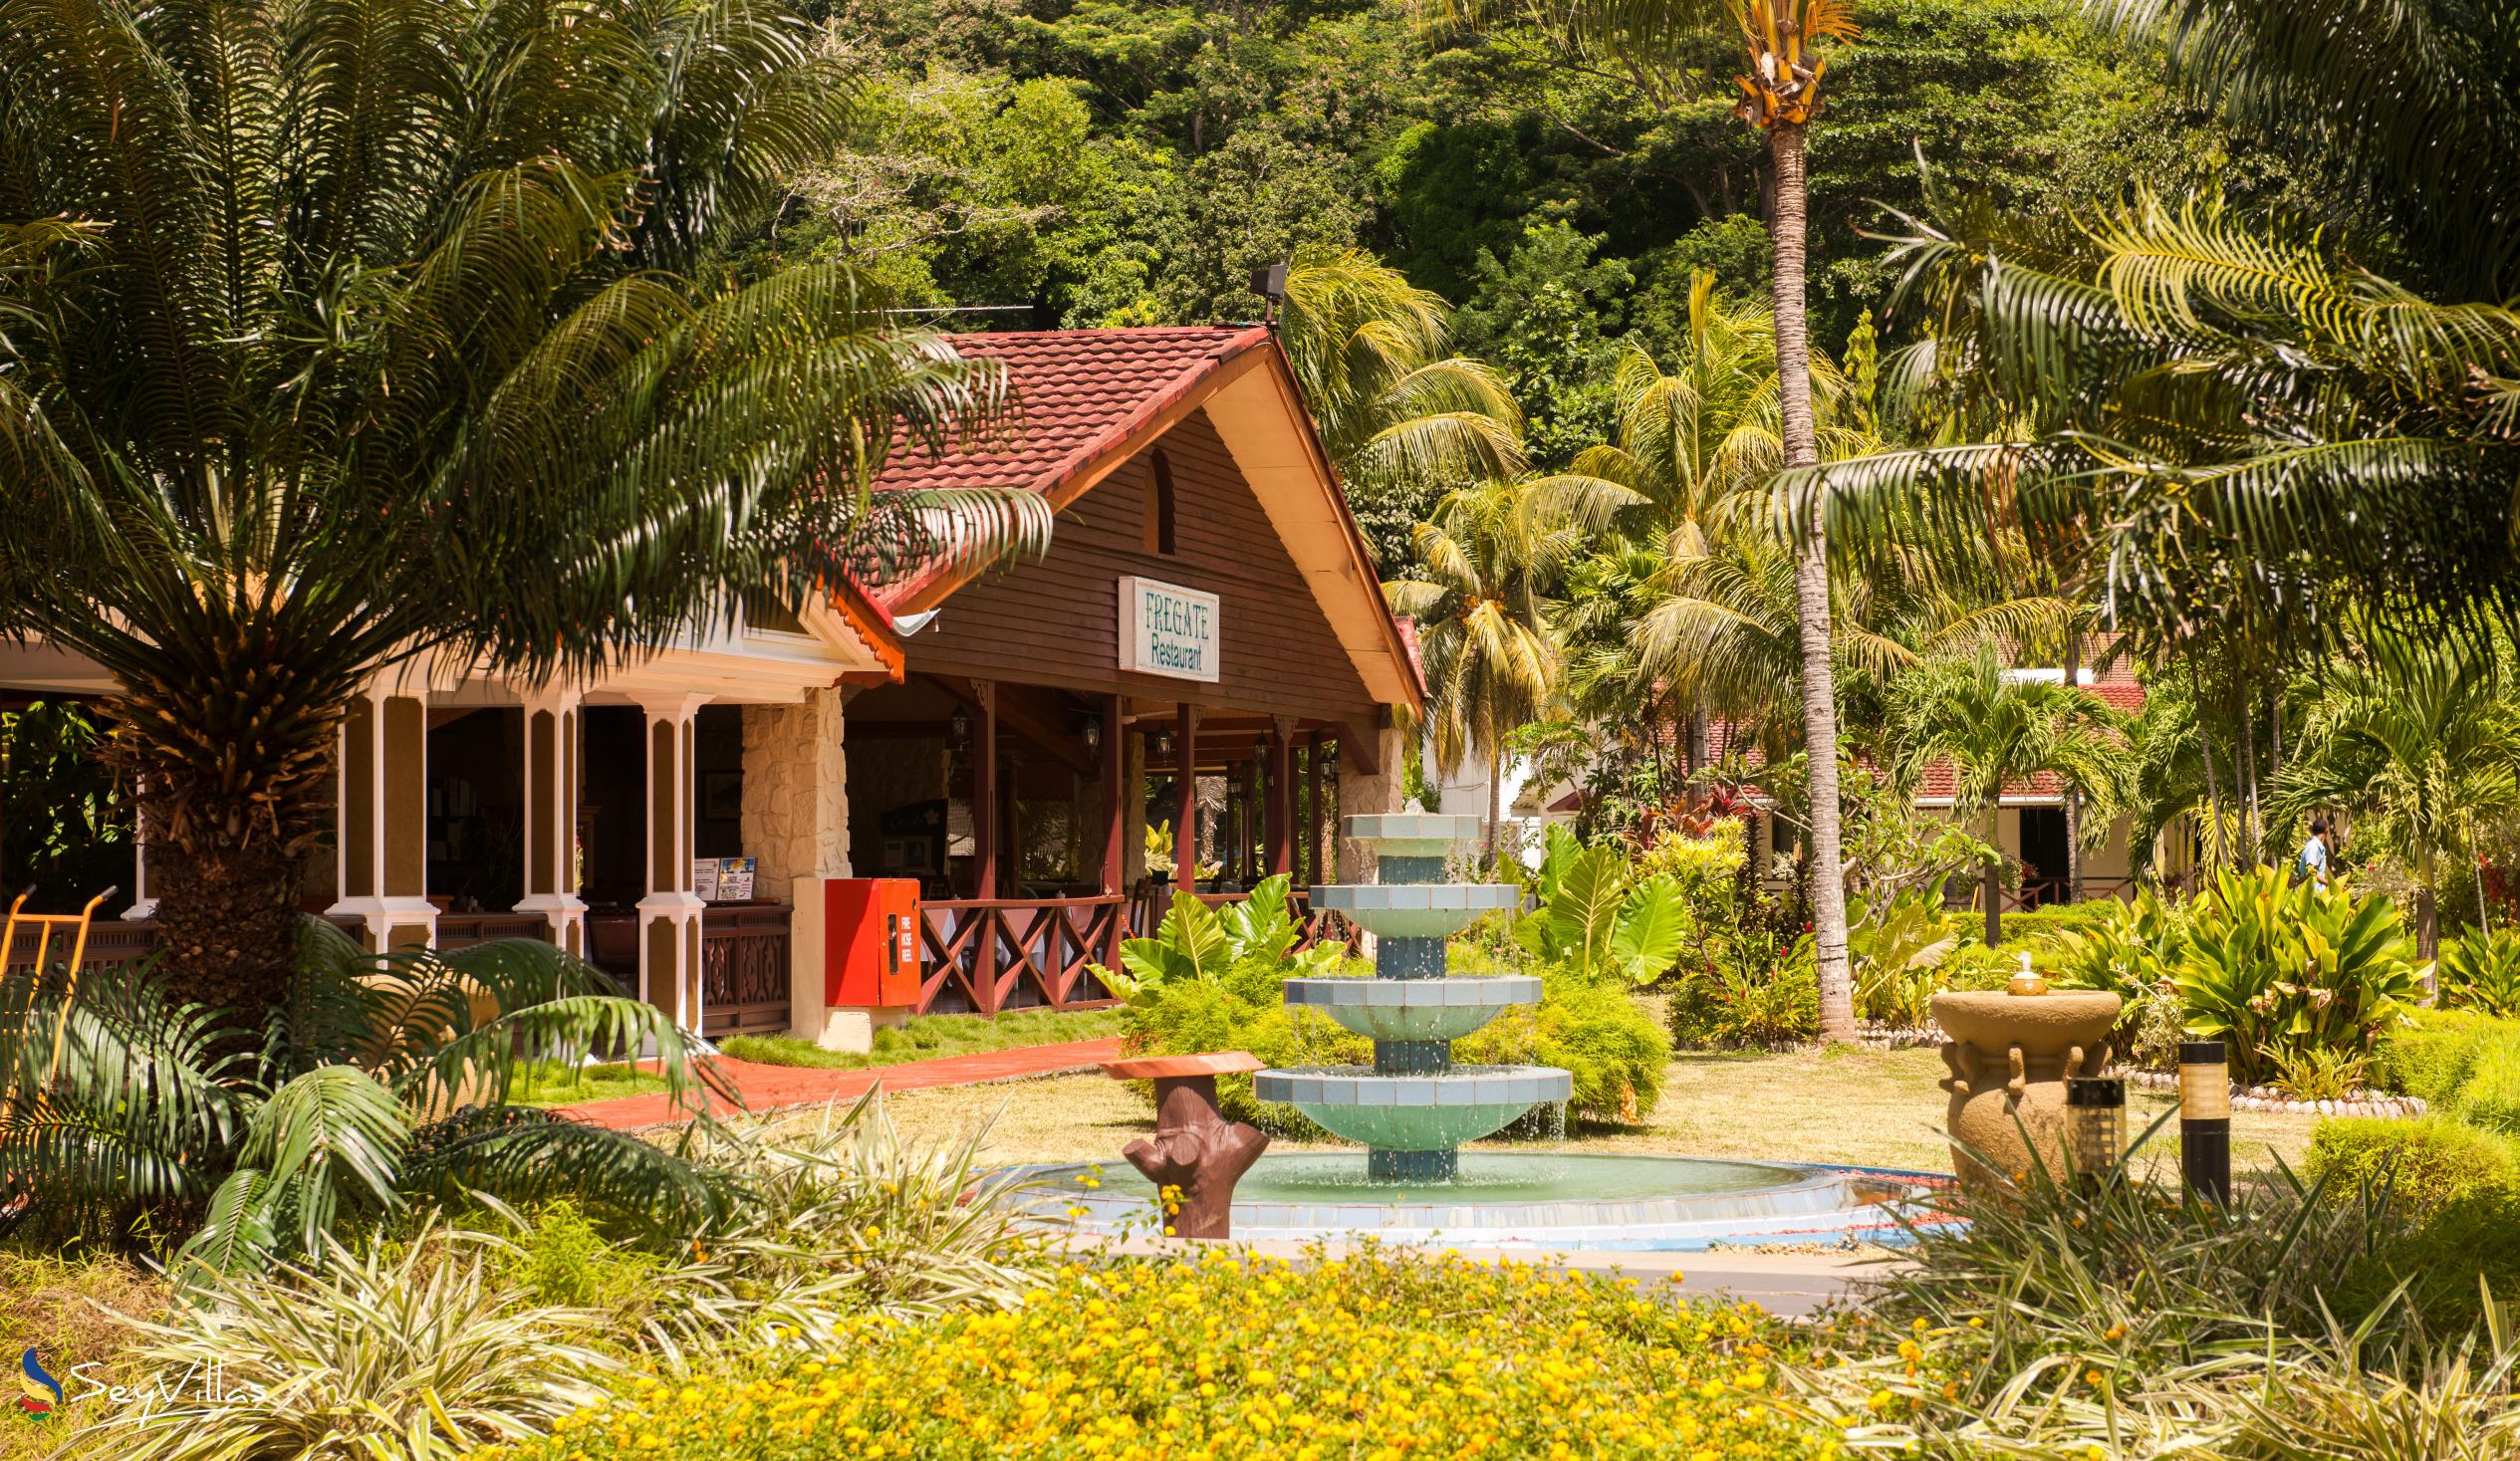 Photo 9: Berjaya Praslin Resort - Outdoor area - Praslin (Seychelles)